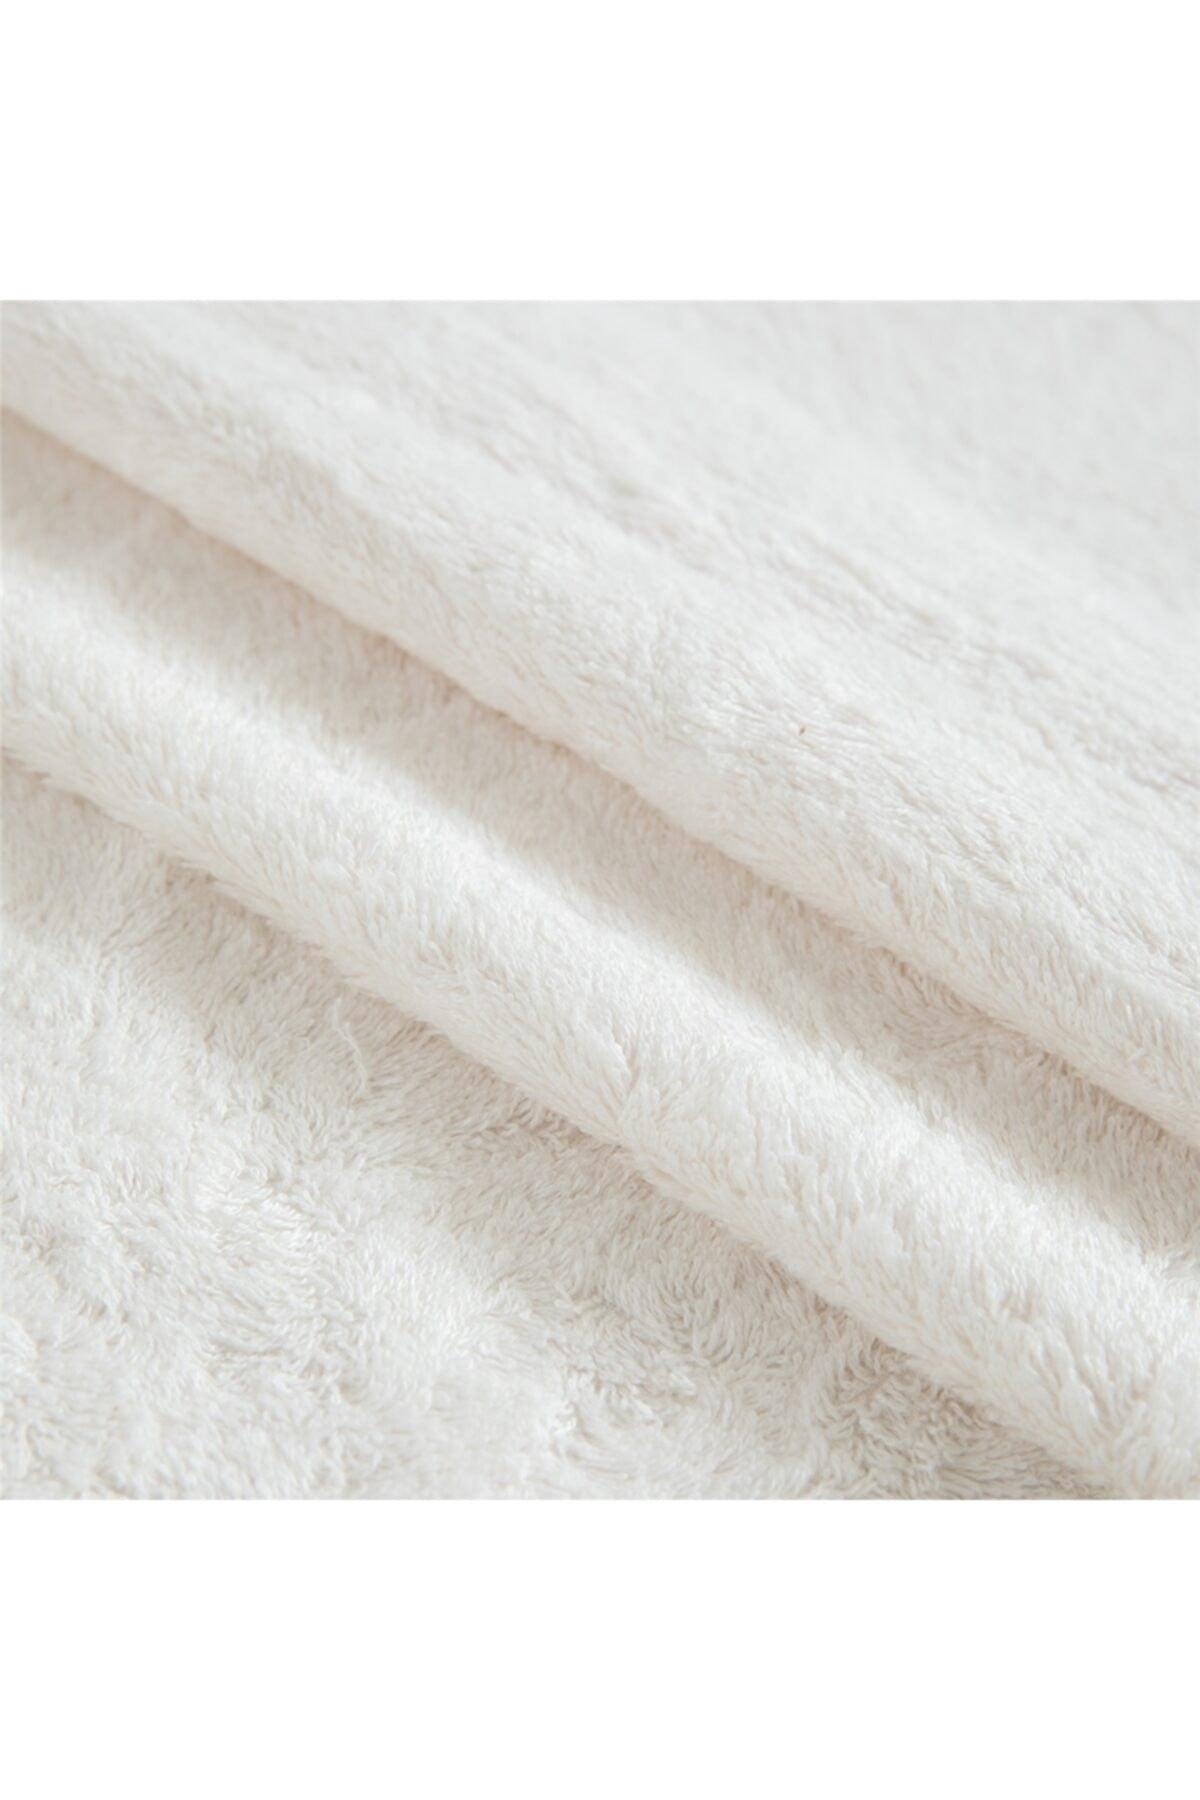 Floss Face Towel 50x90 Cm Ecru - Swordslife